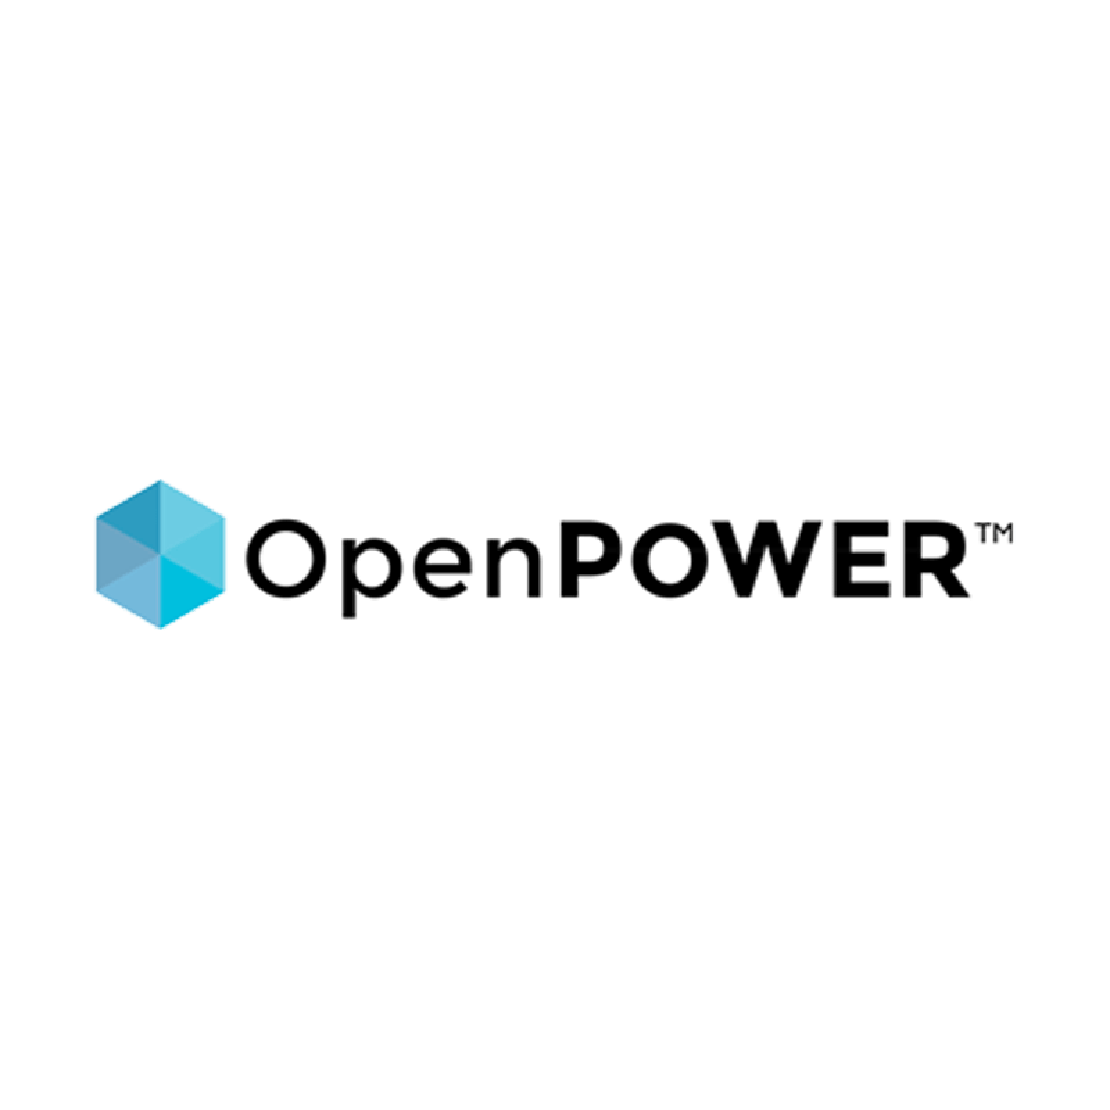 OpenPOWER  Foundation members